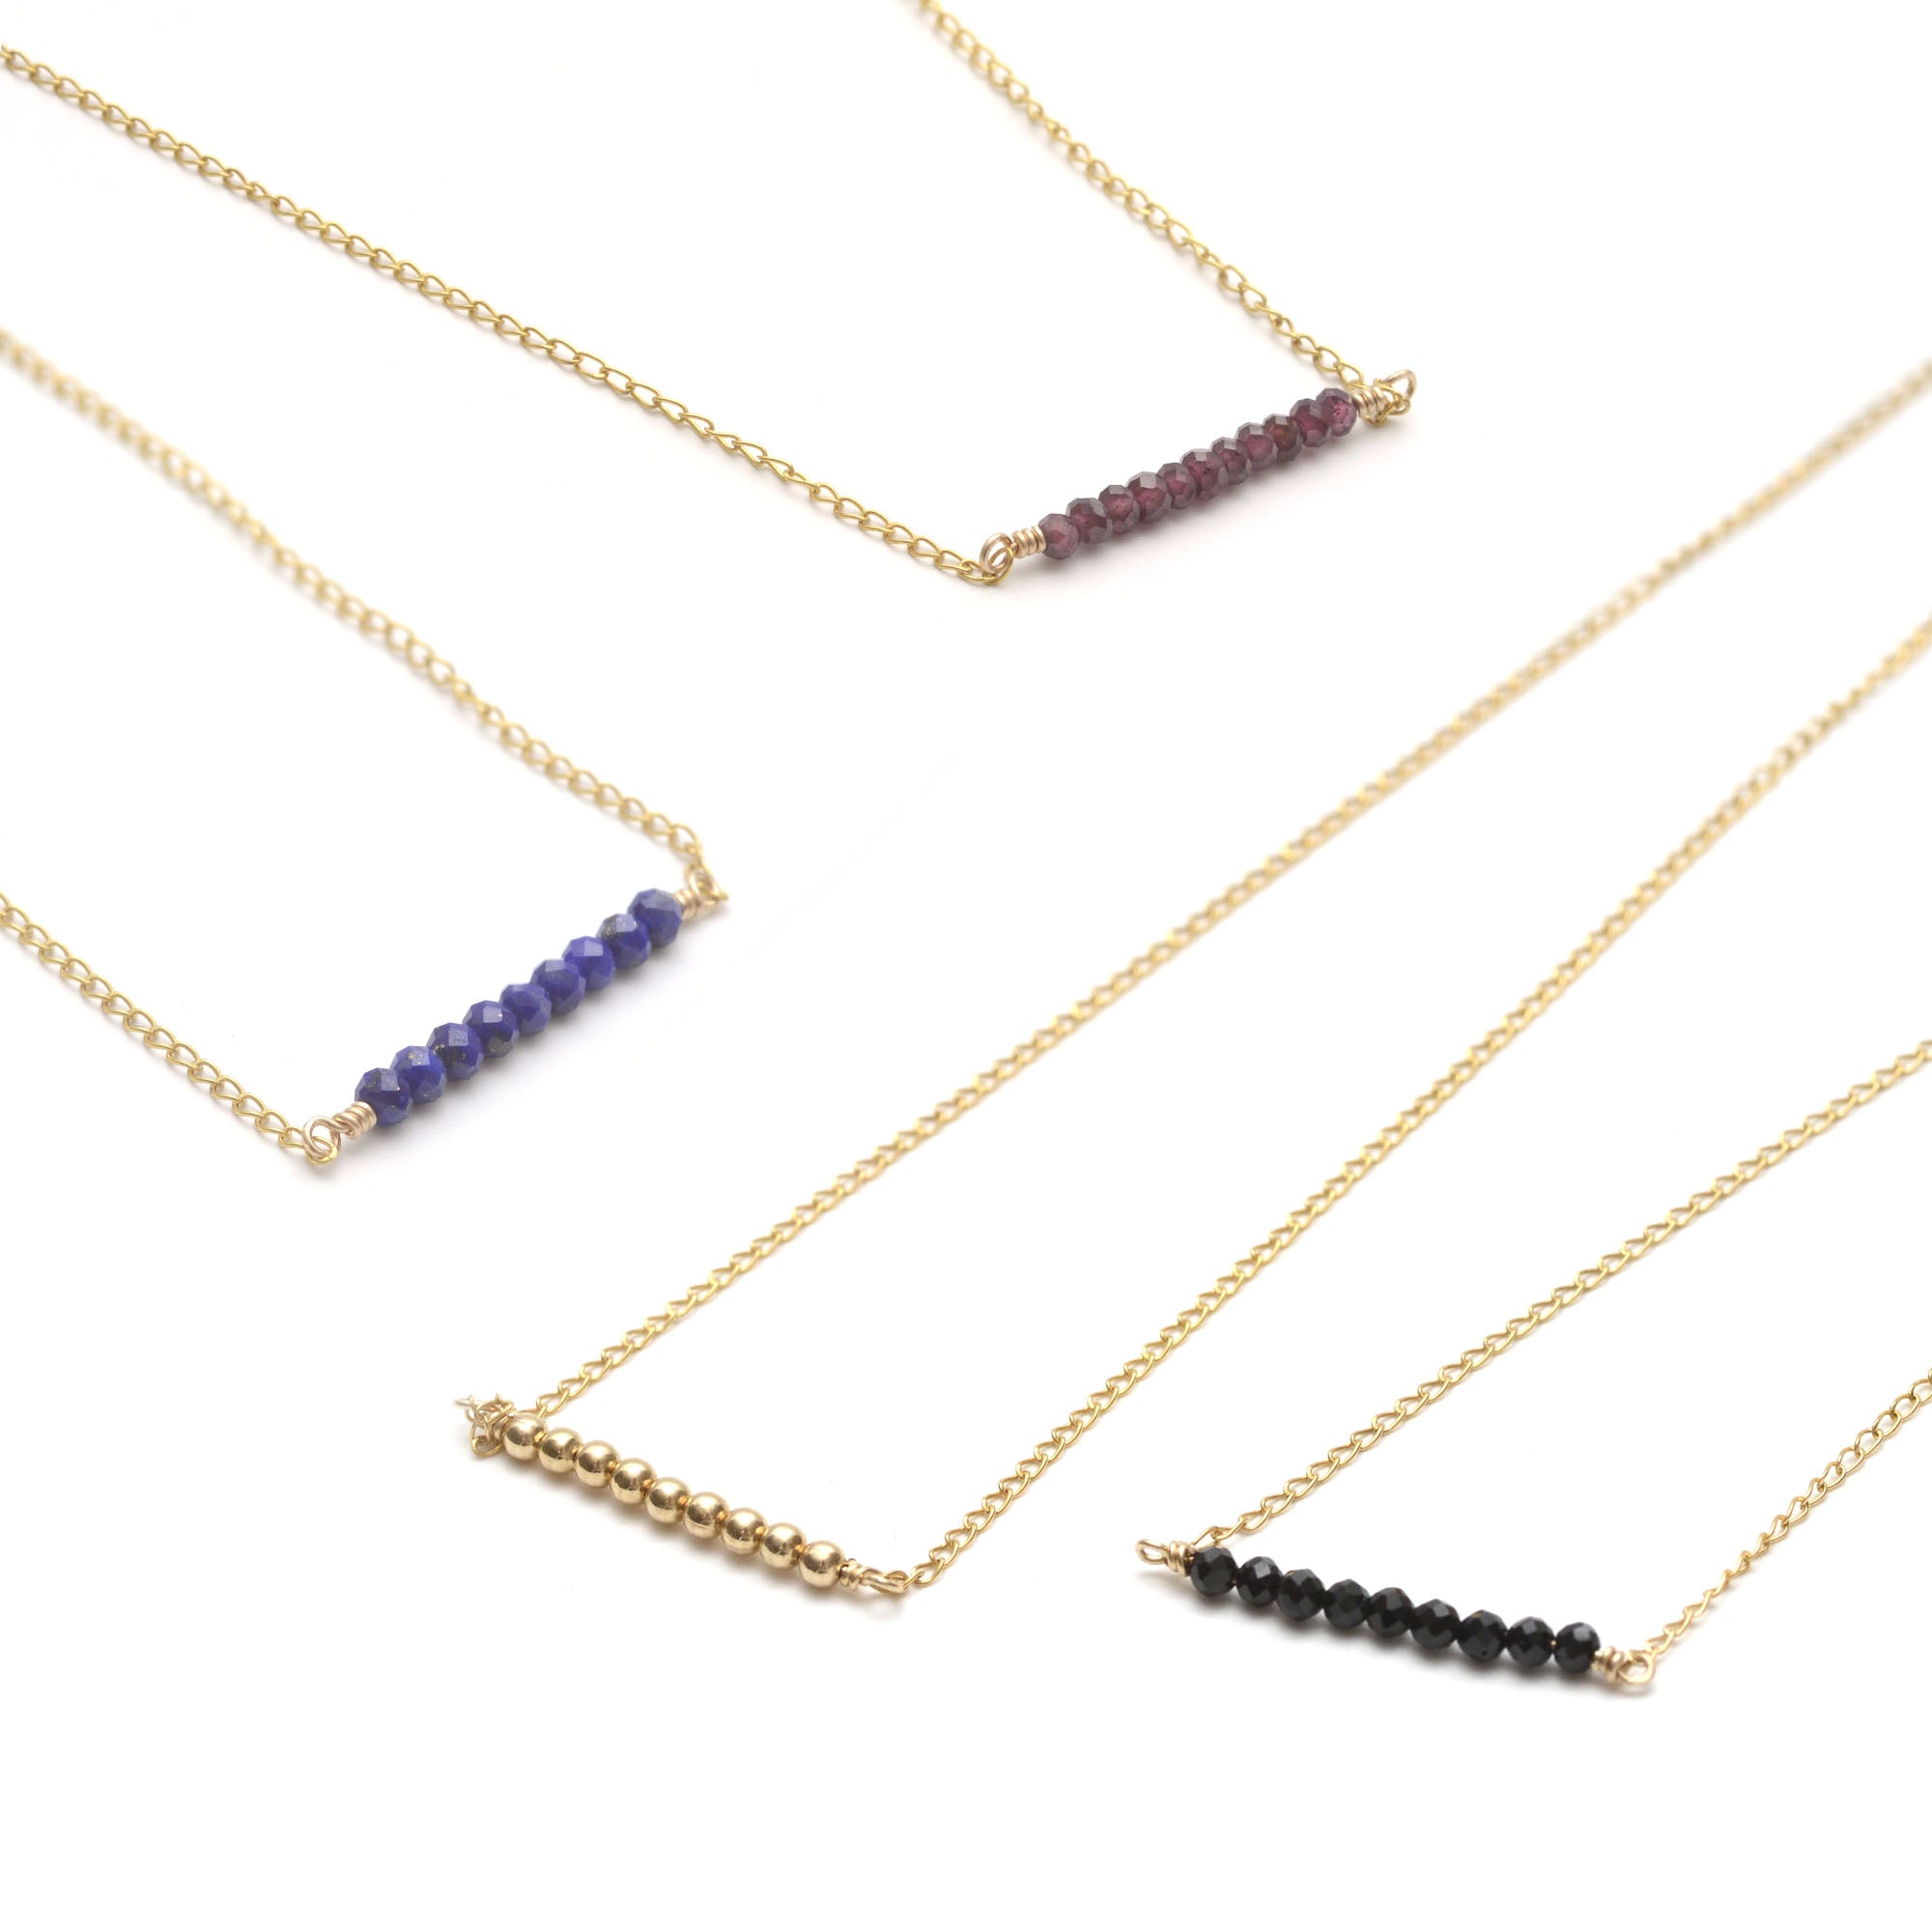 Tiny Gemstone Necklaces - Favor Jewelry